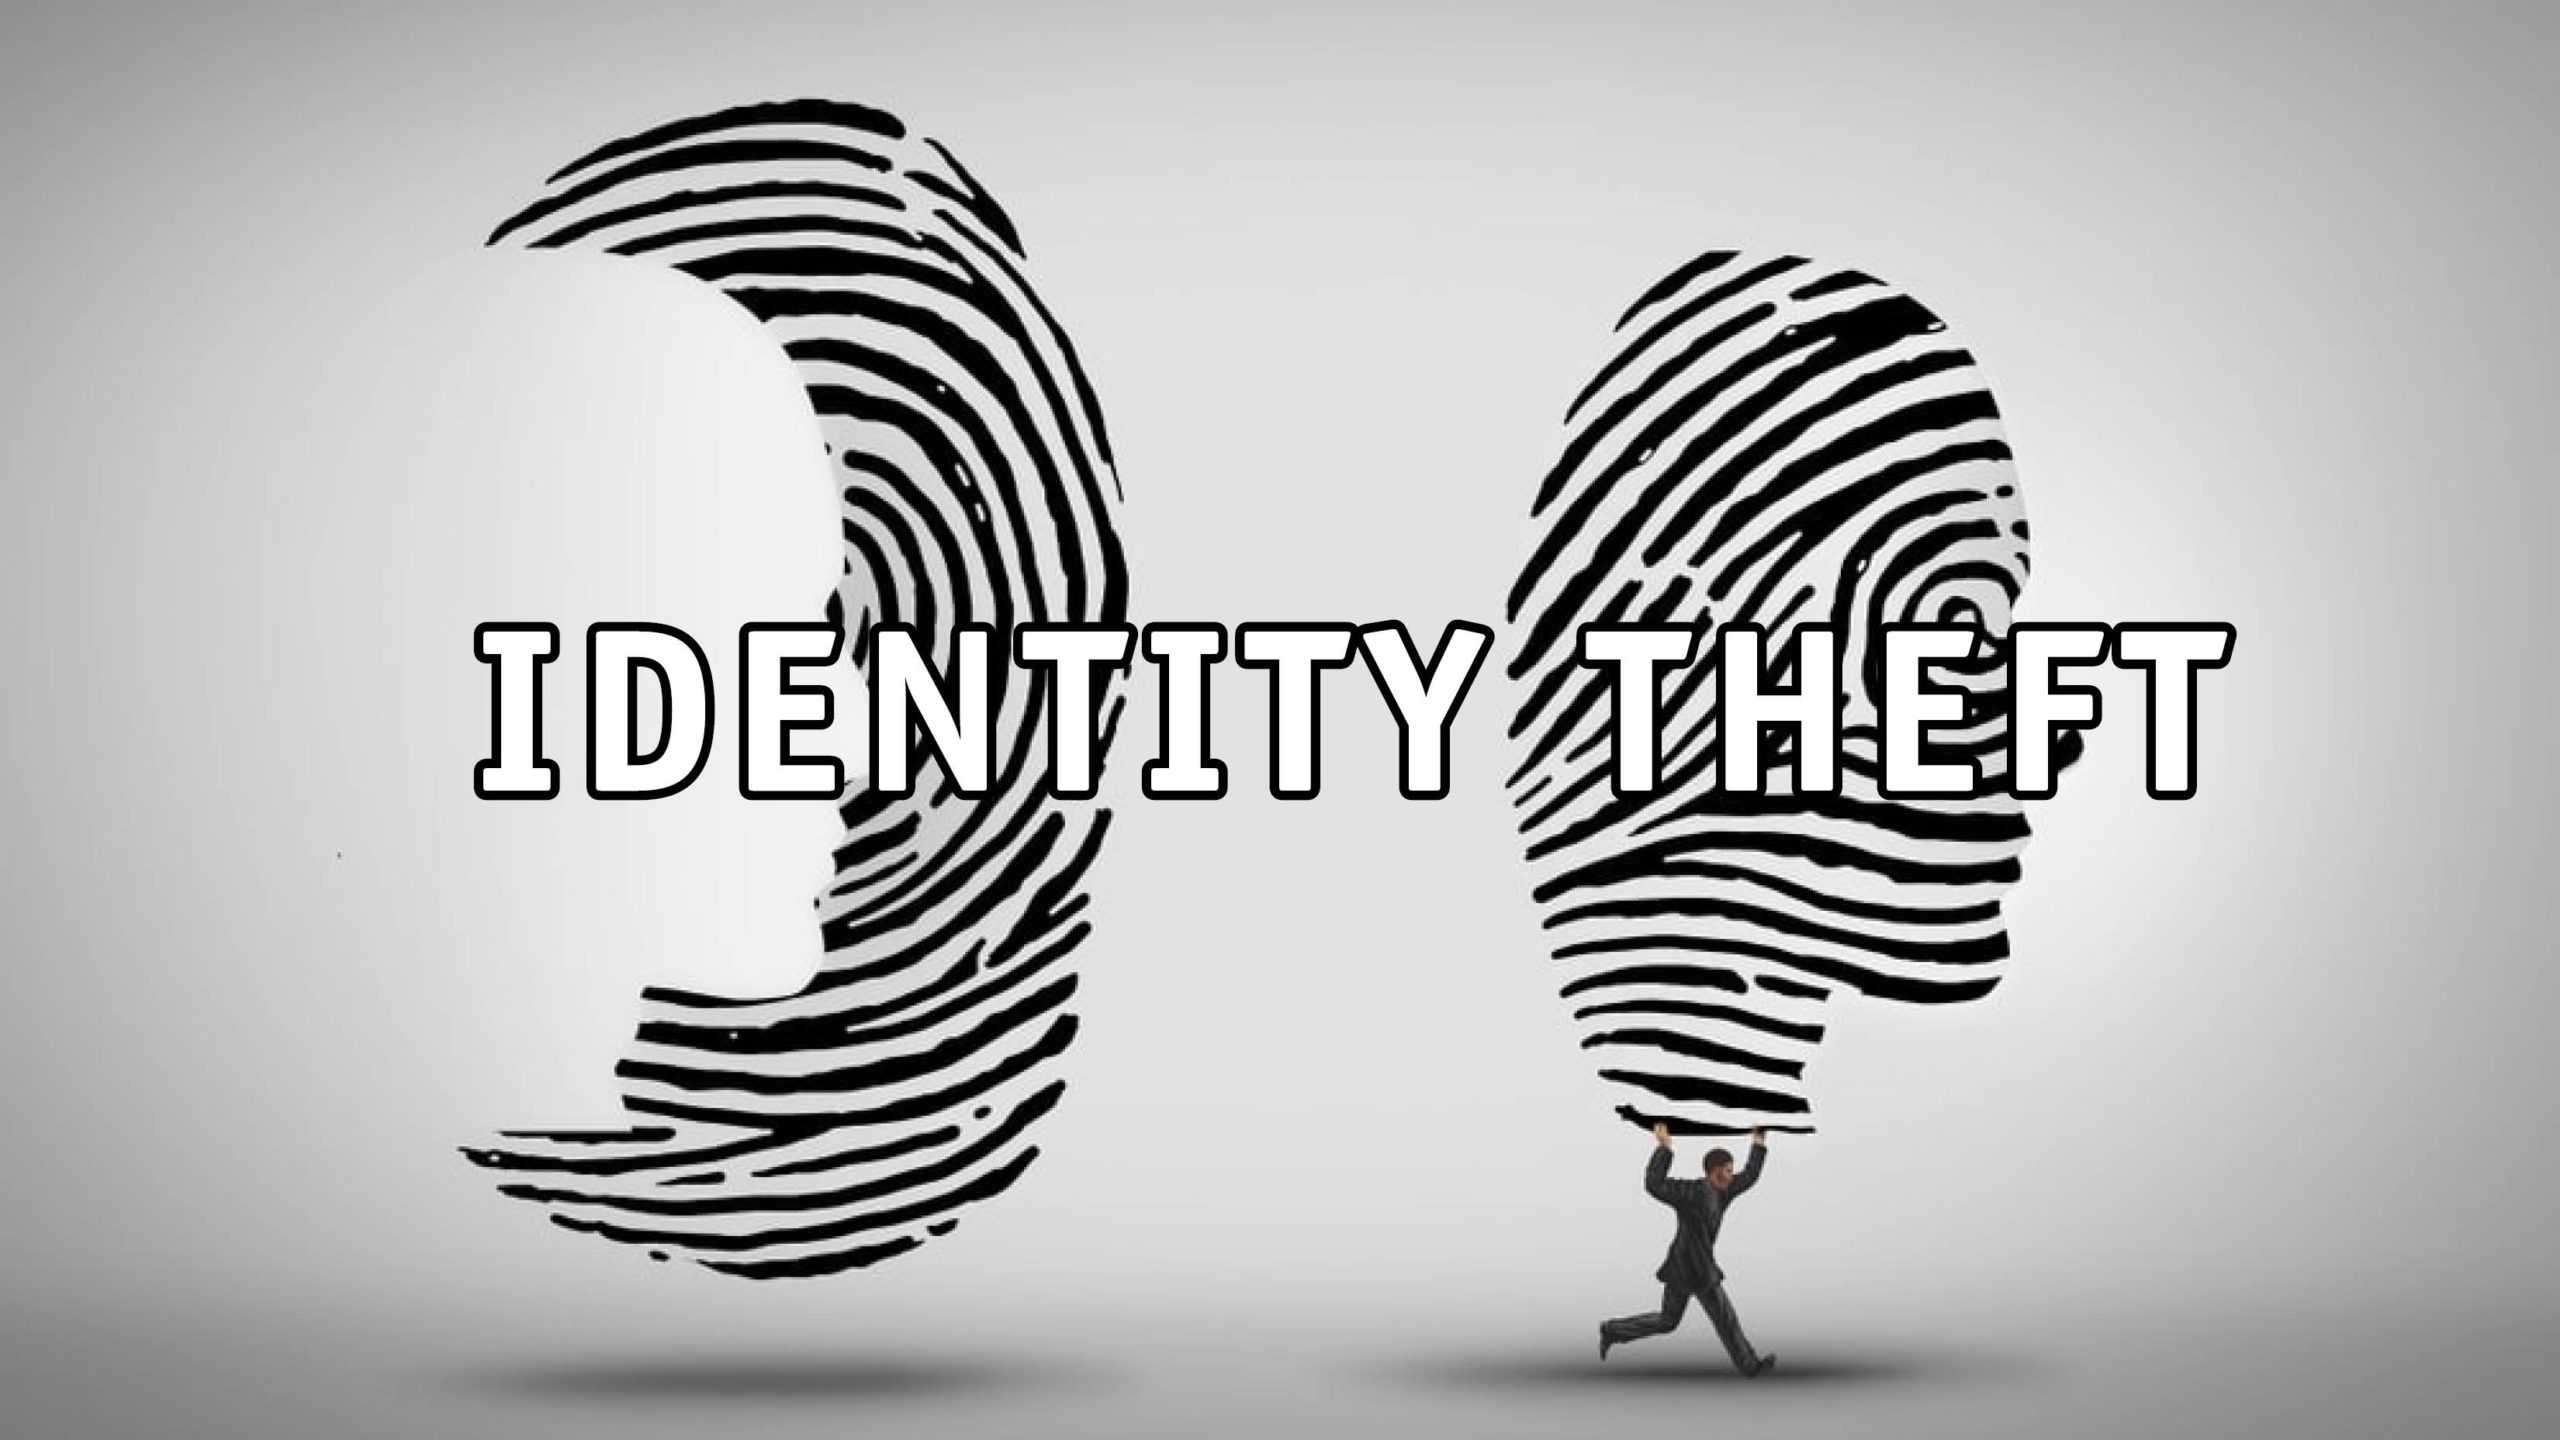 Identity Theft – Part 2